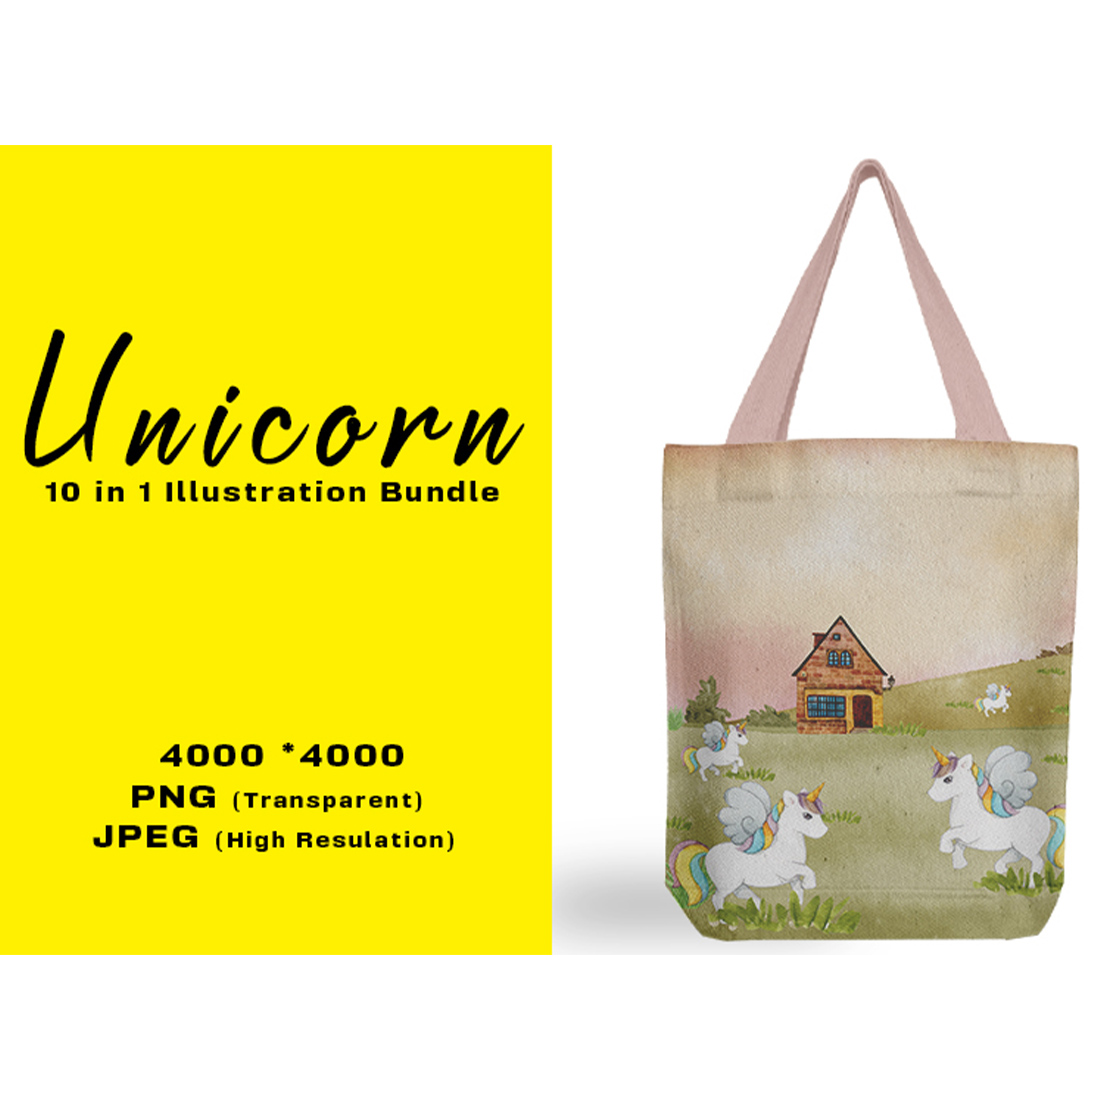 Image of a bag with a unique unicorn print